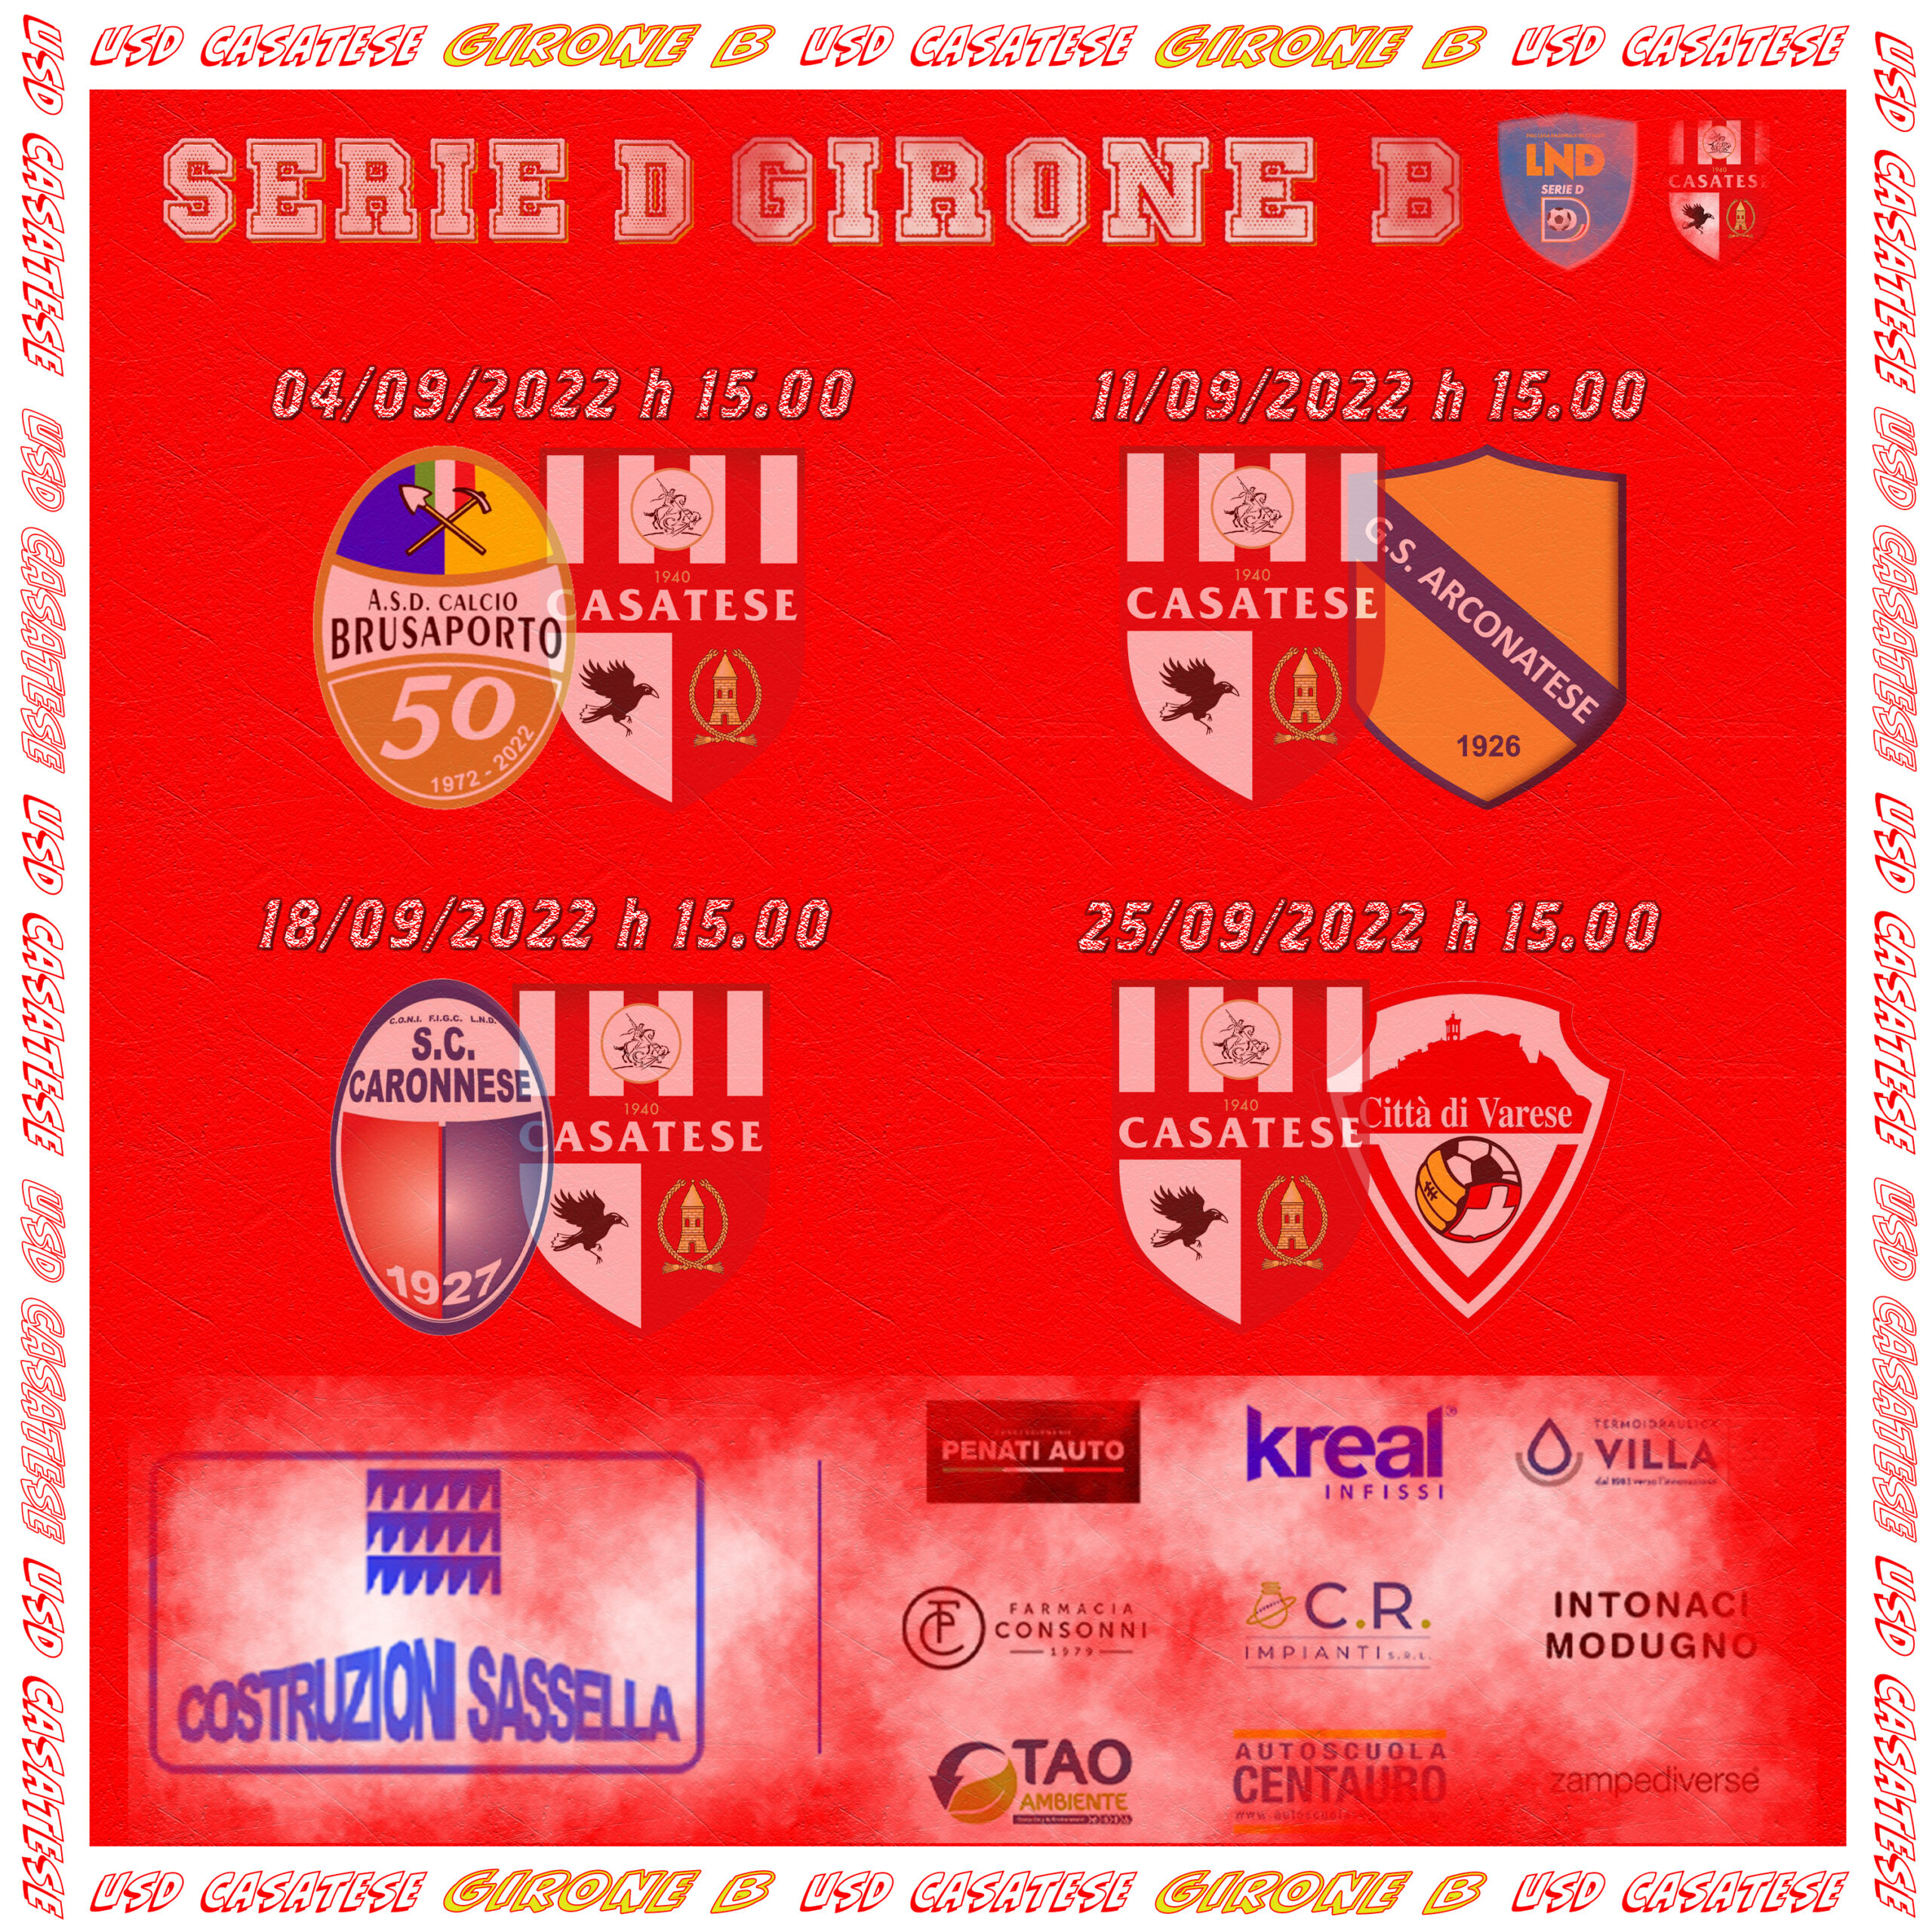 Girone B Serie D Settembre